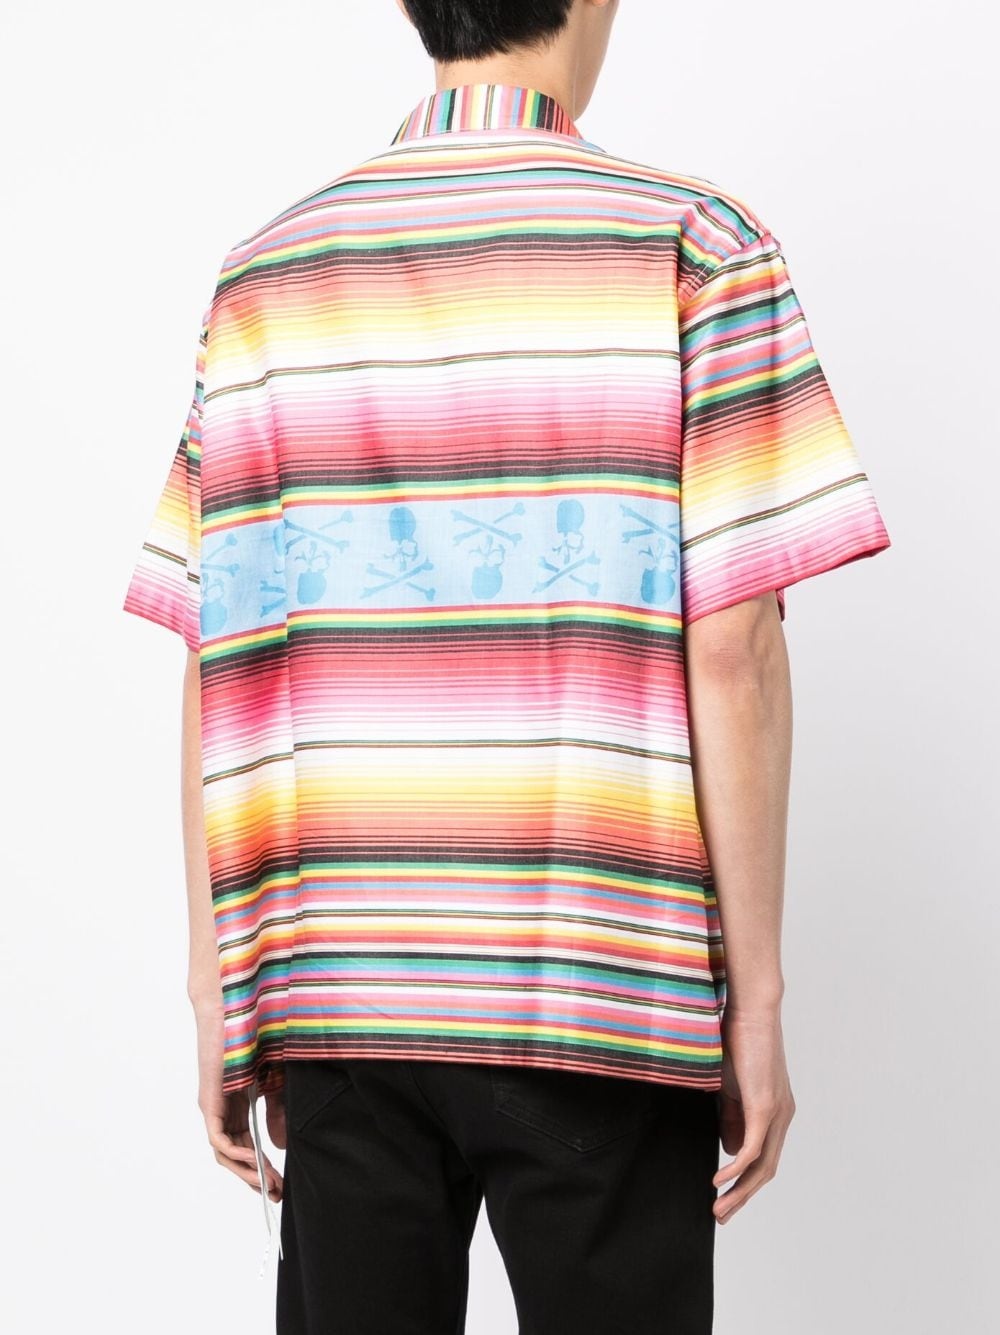 skull-print striped shirt - 4